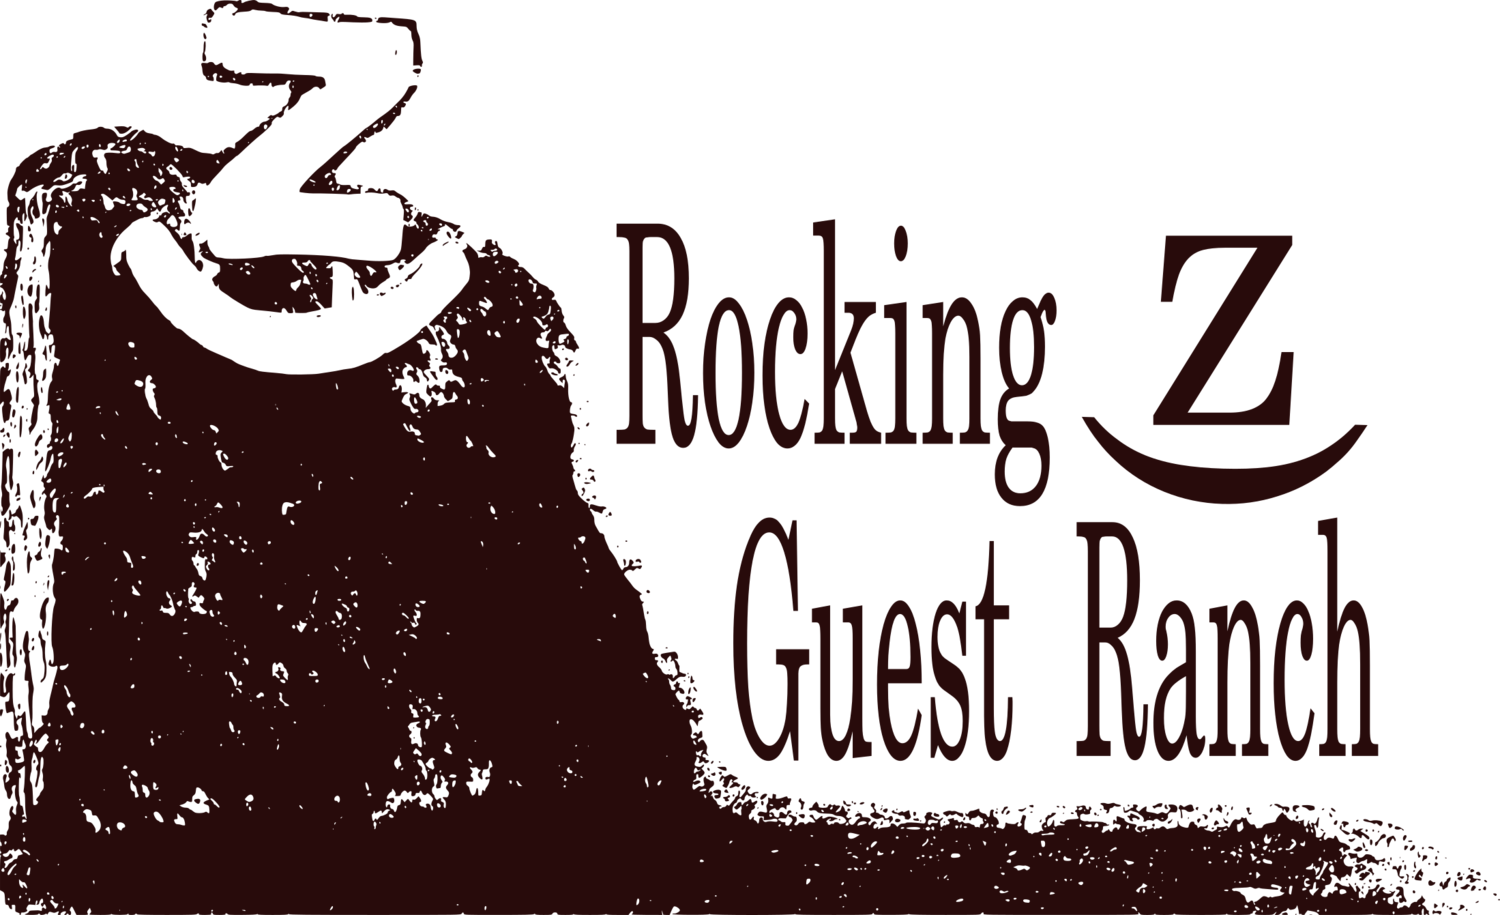 Rocking Z Guest Ranch